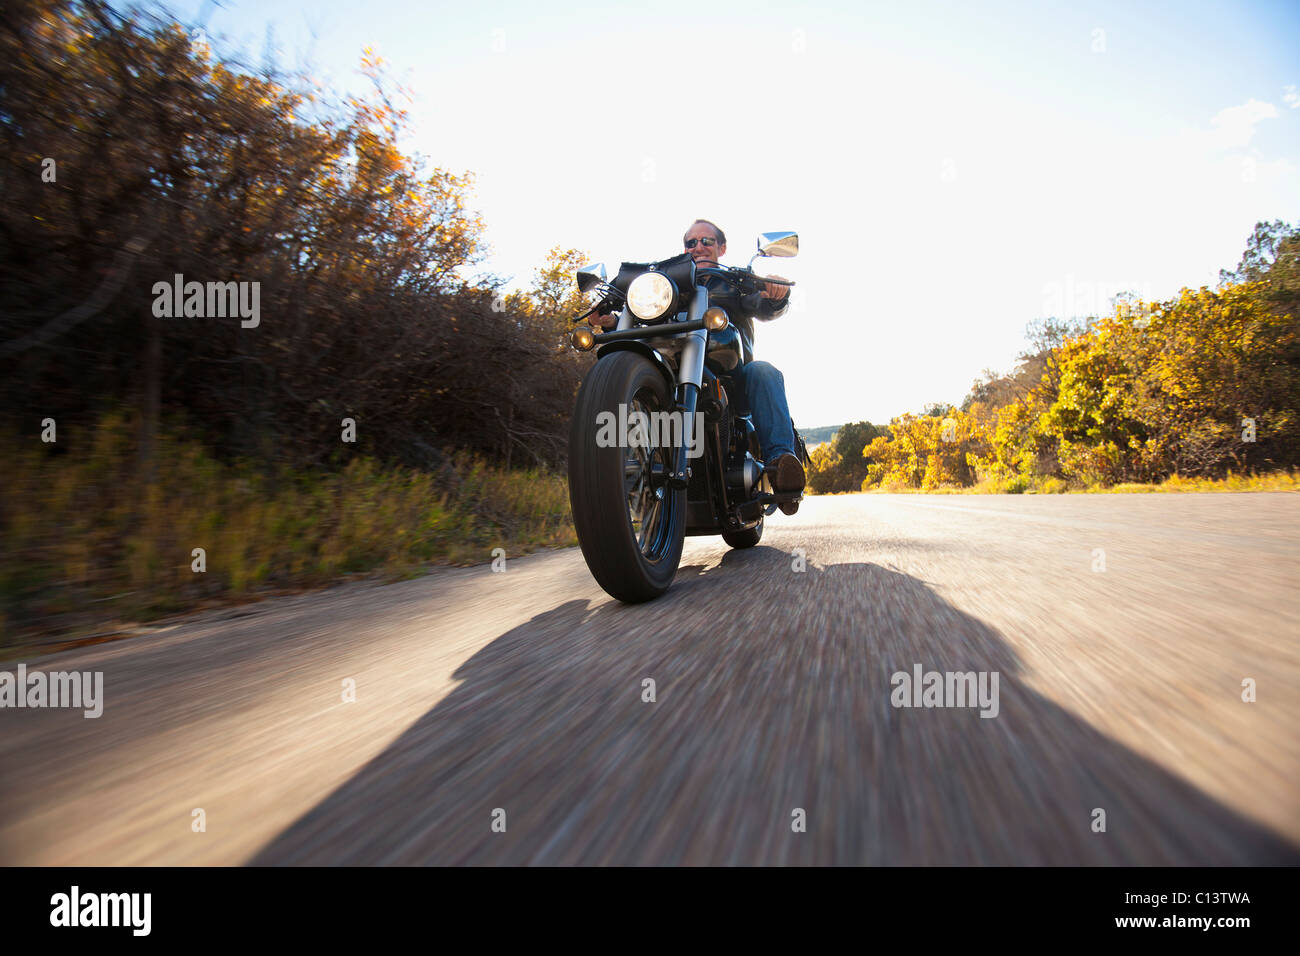 USA, Colorado, Carbondale, Mature man driving motorcycle Stock Photo